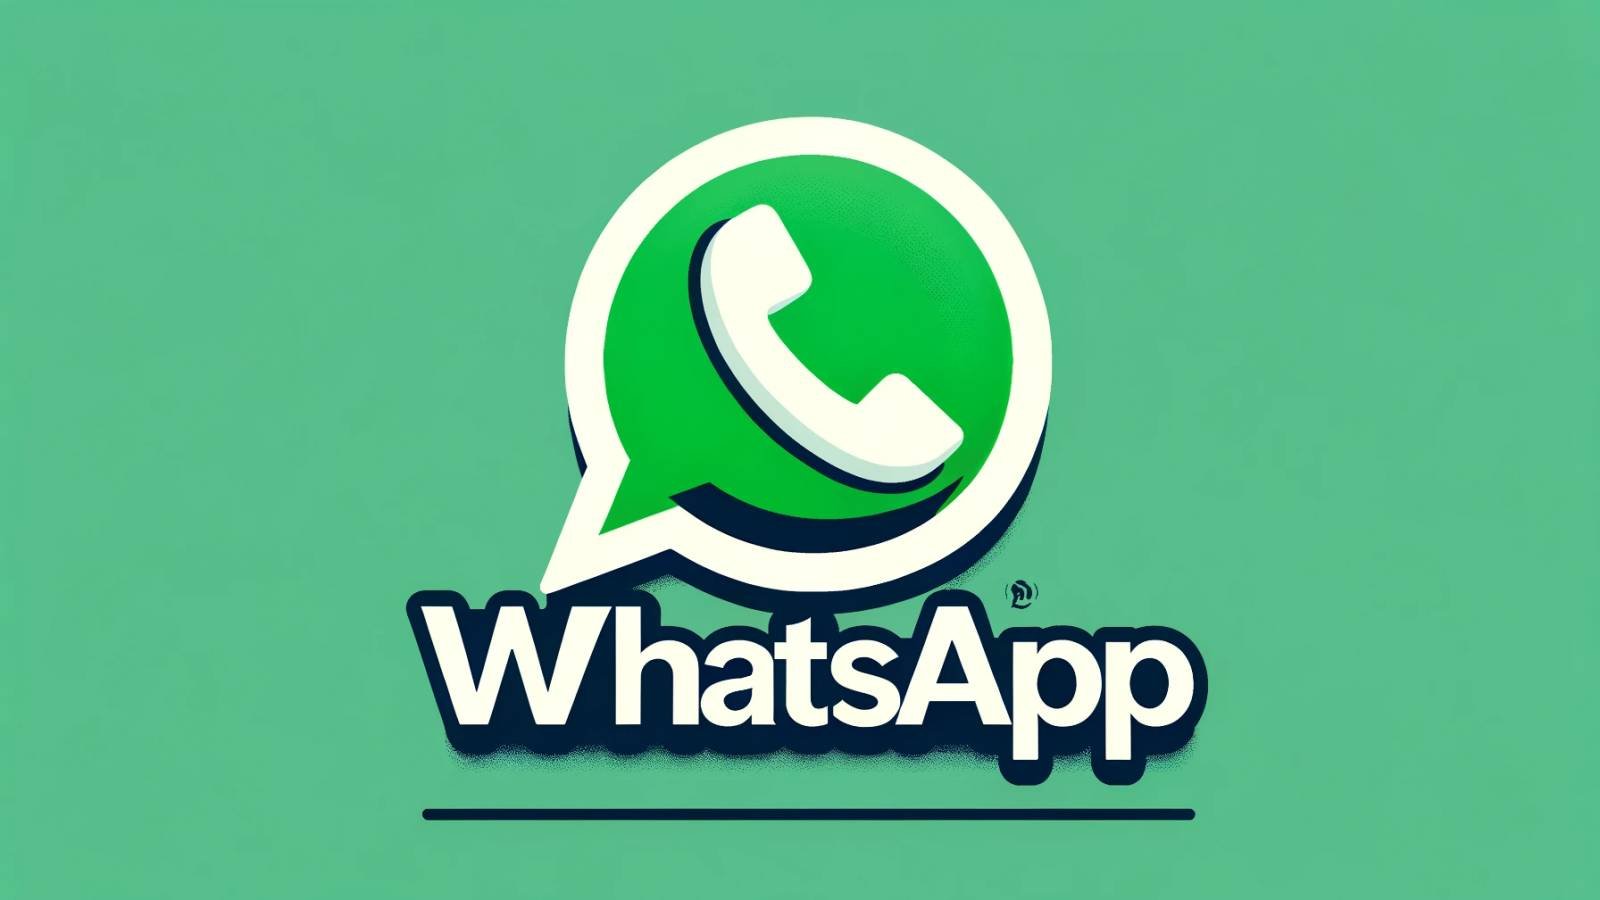 WhatsApp vedholdende